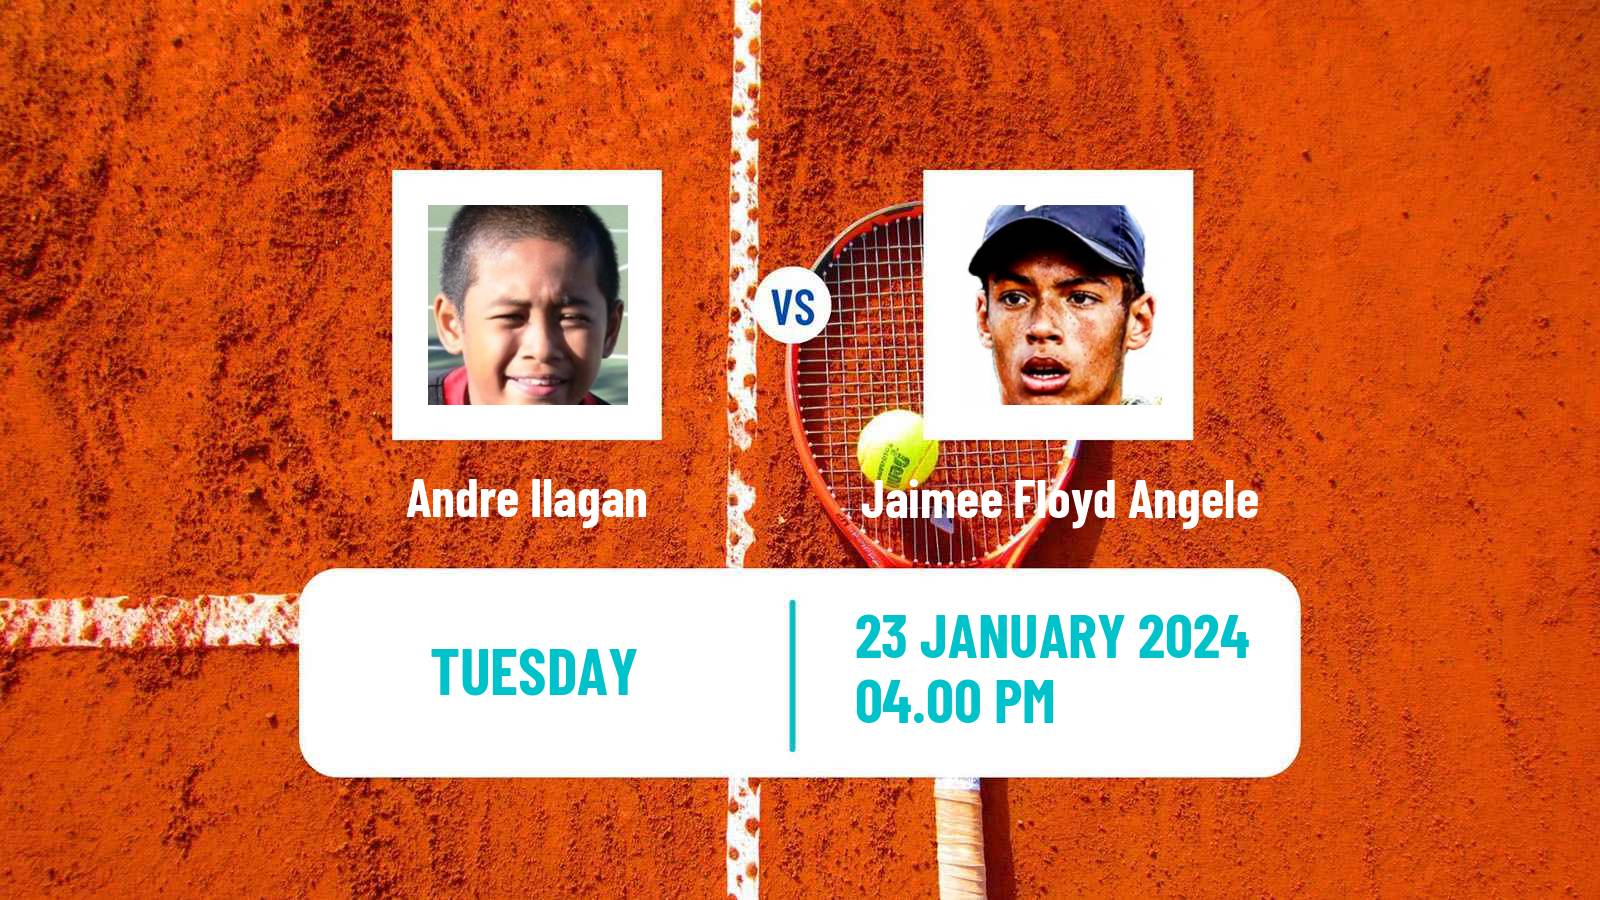 Tennis Indian Wells 2 Challenger Men Andre Ilagan - Jaimee Floyd Angele